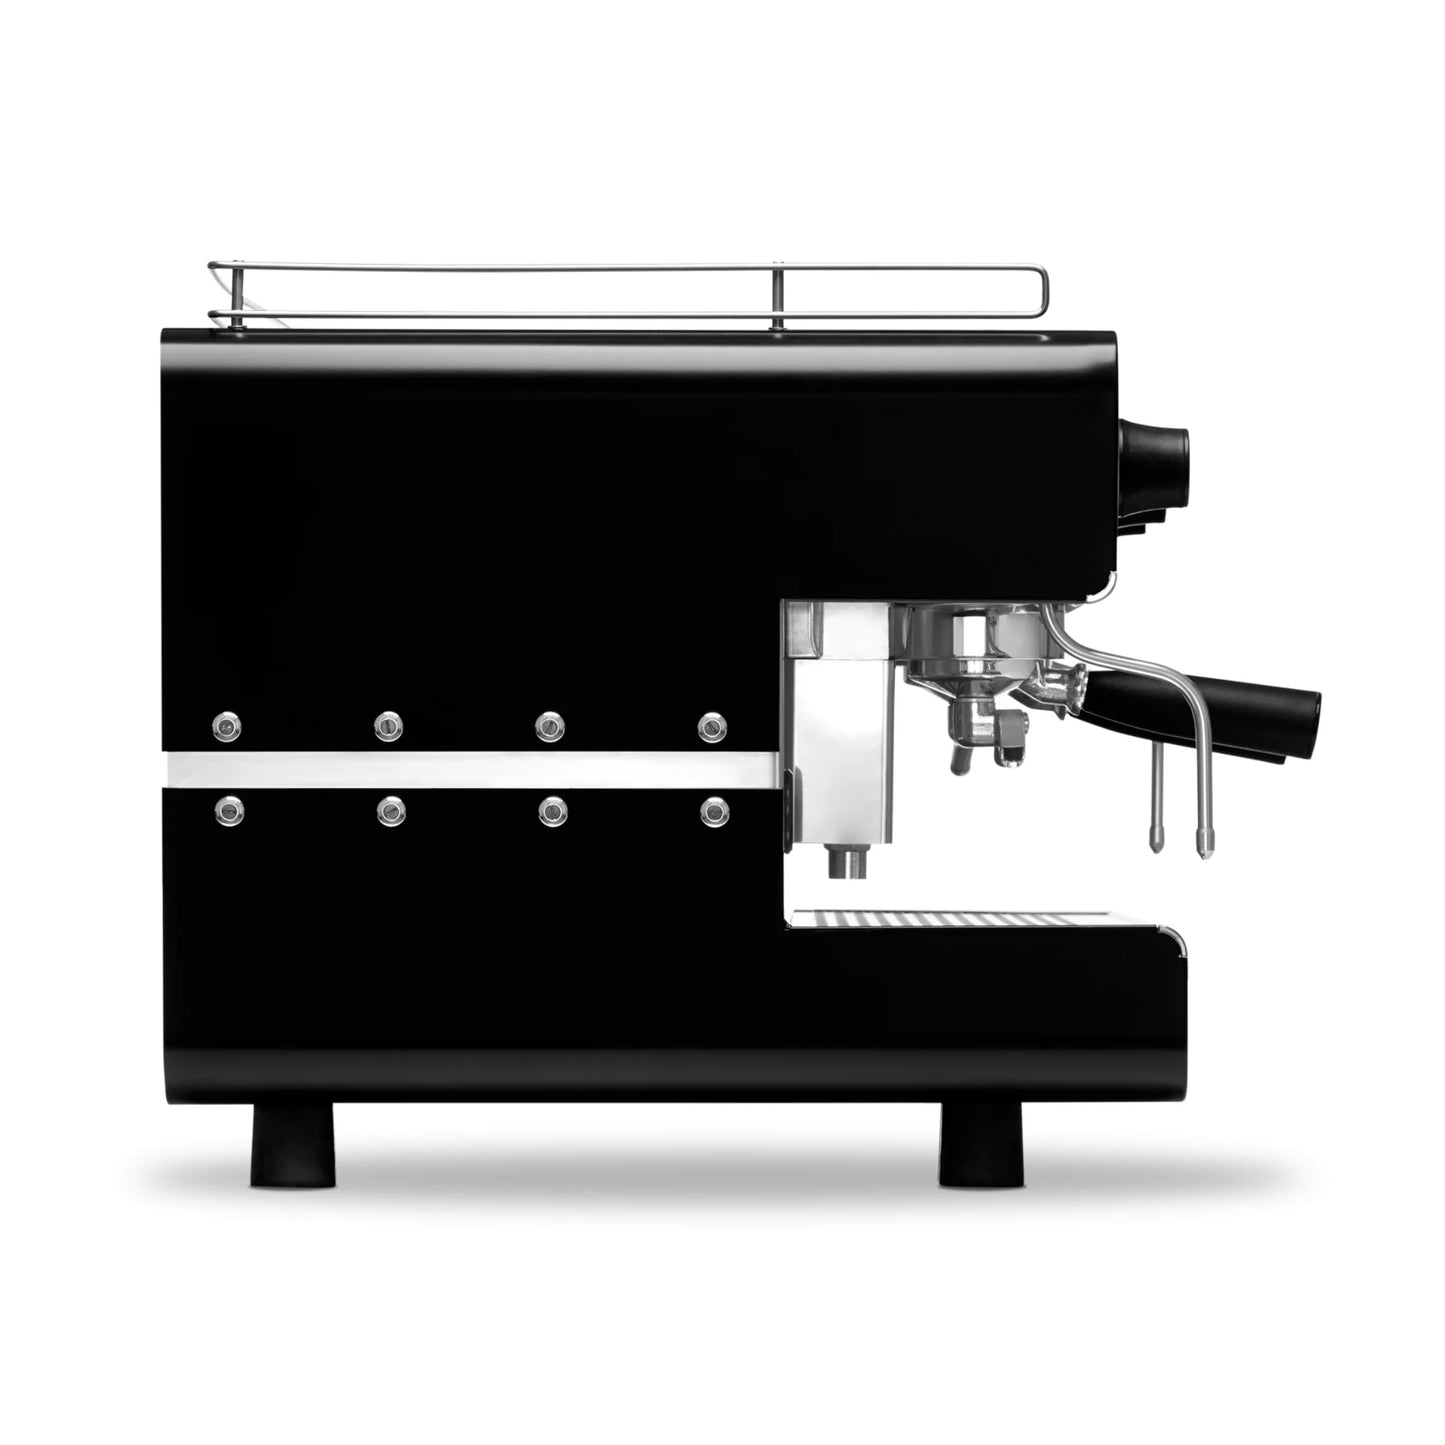 Iberital IB7 Compact (2 Group) Pure Black – Fully Automatic-Electronic Espresso Machine 2850W